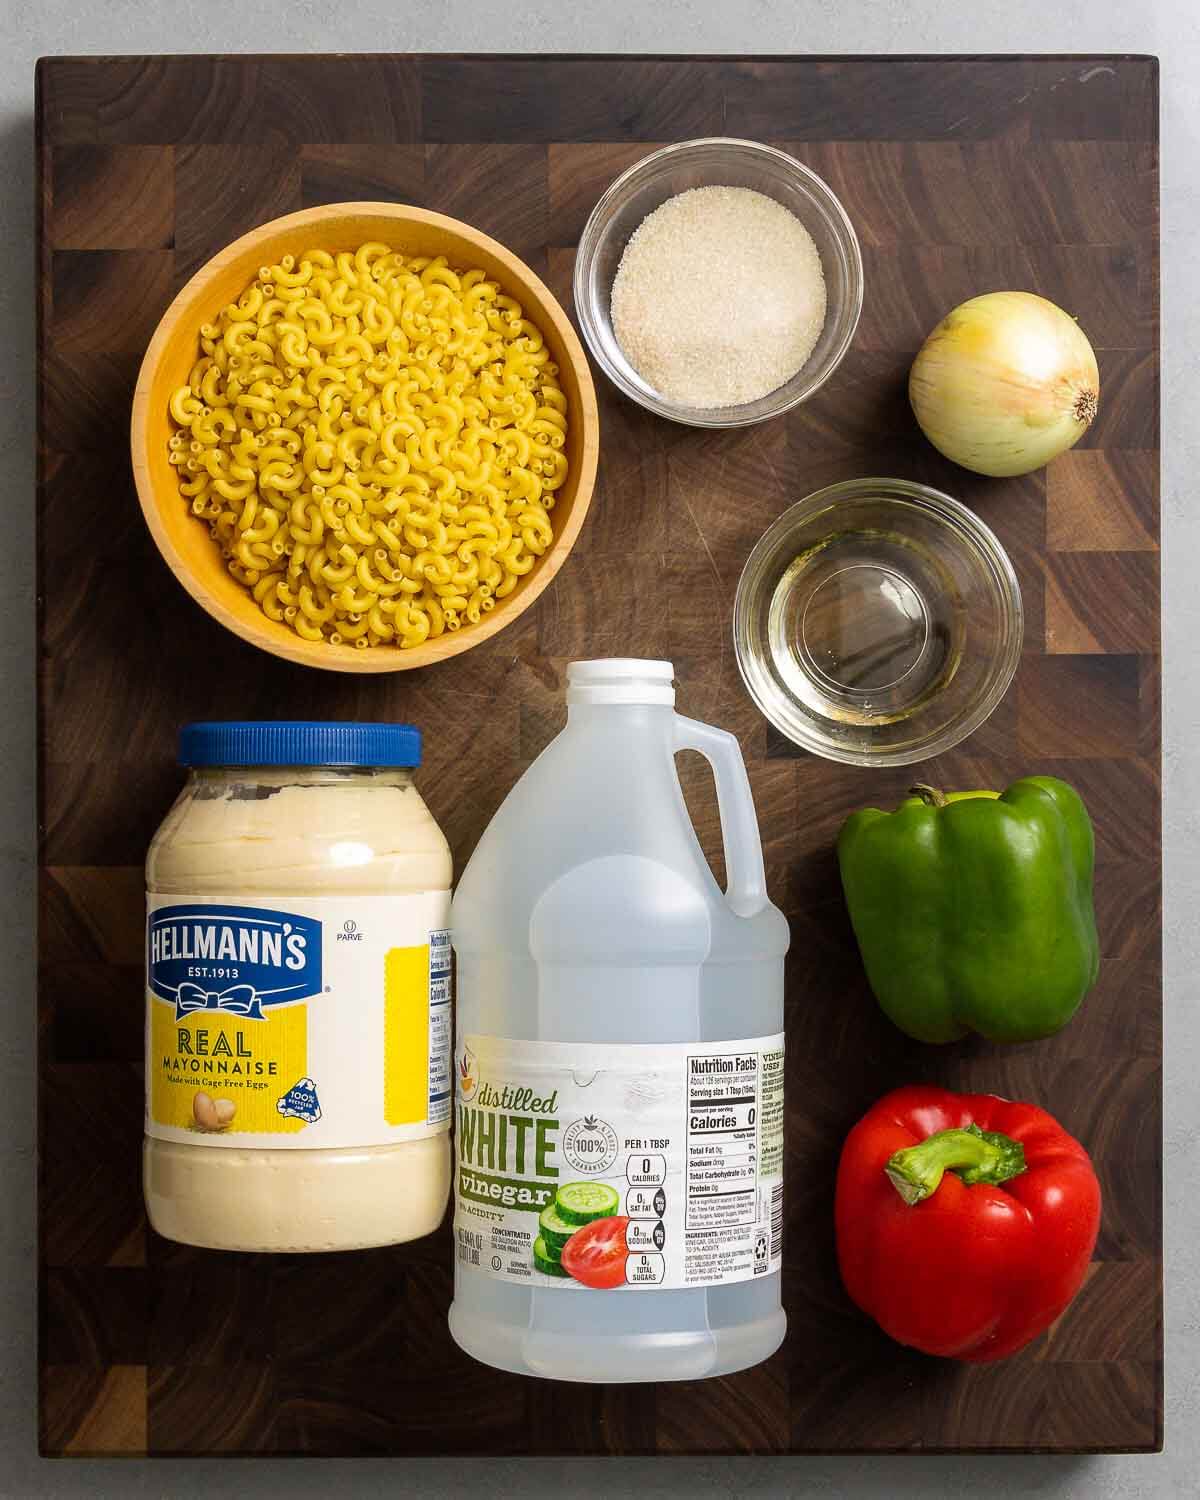 Ingredients shown: macaroni, sugar, onion, vegetable oil, mayonnaise, vinegar, bell pepper.